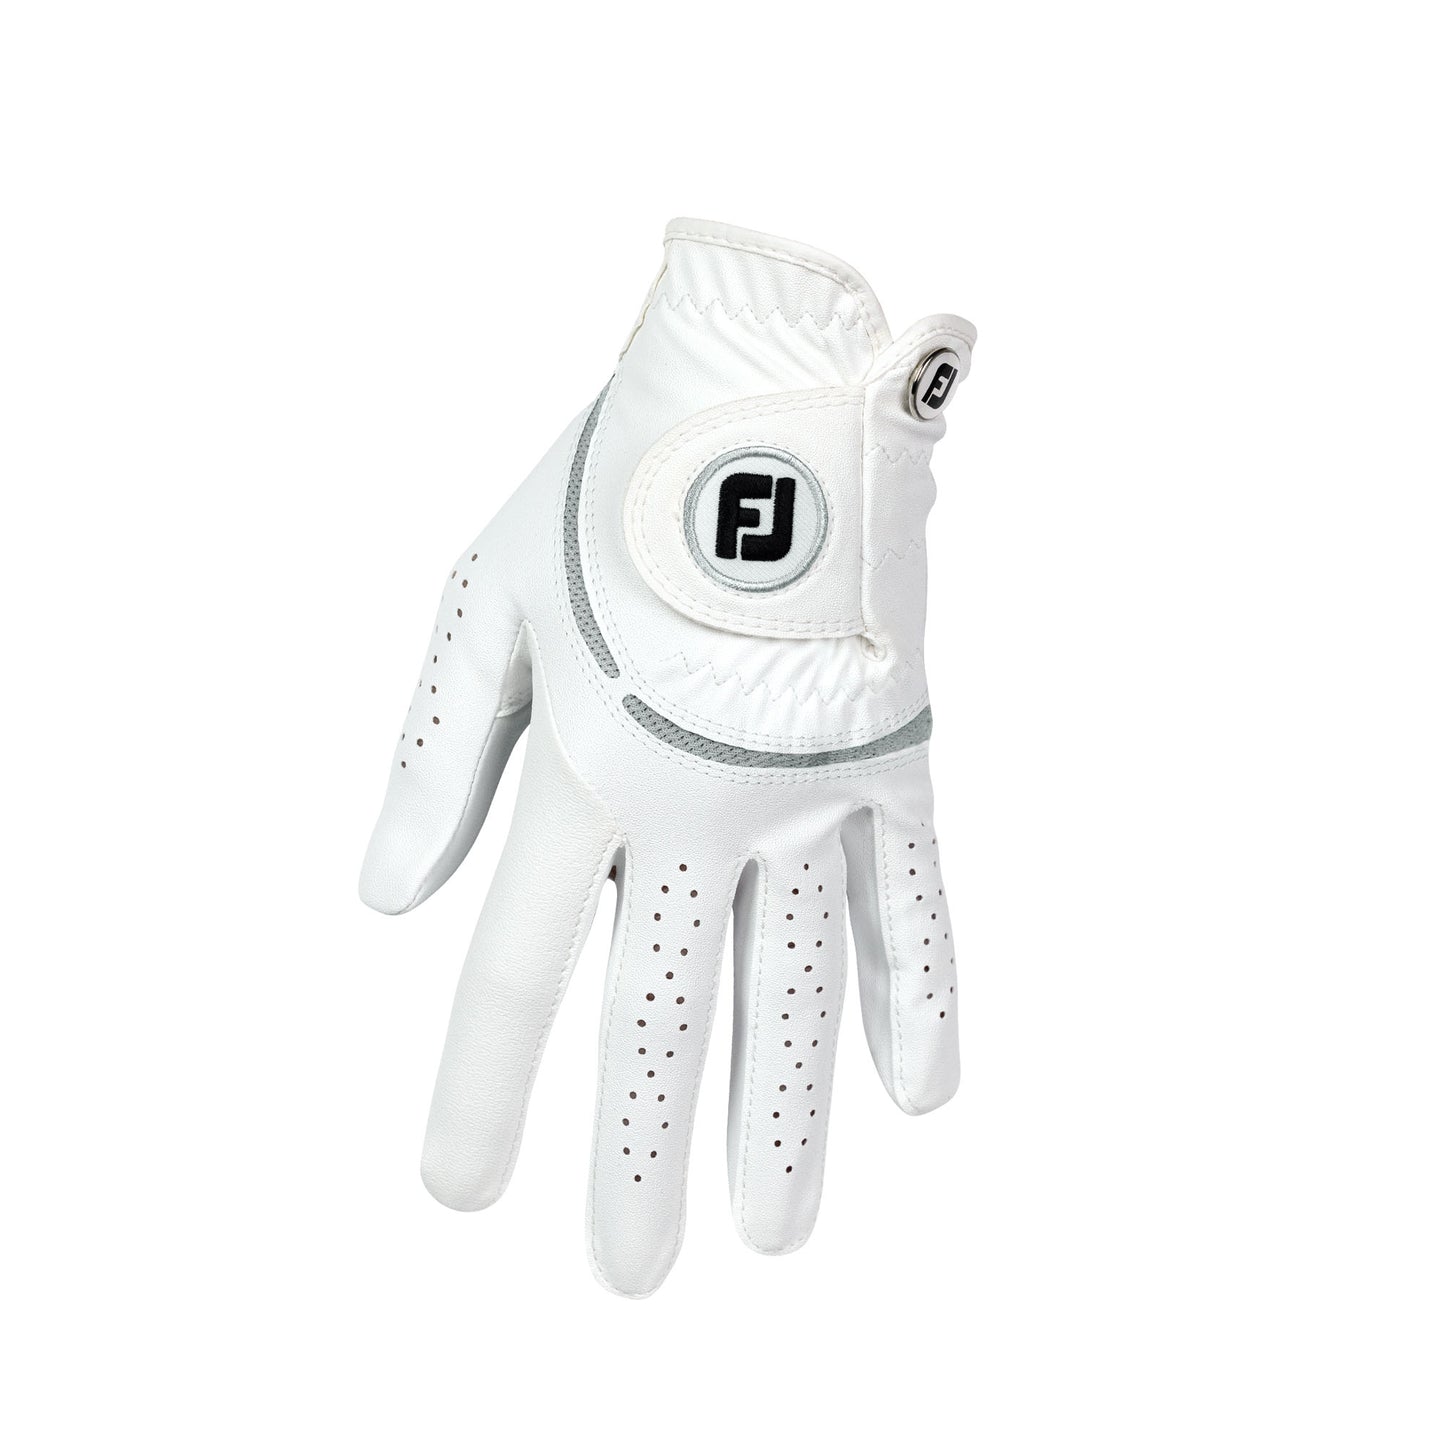 FootJoy Ladies WeatherSof Golf Glove in White & Grey